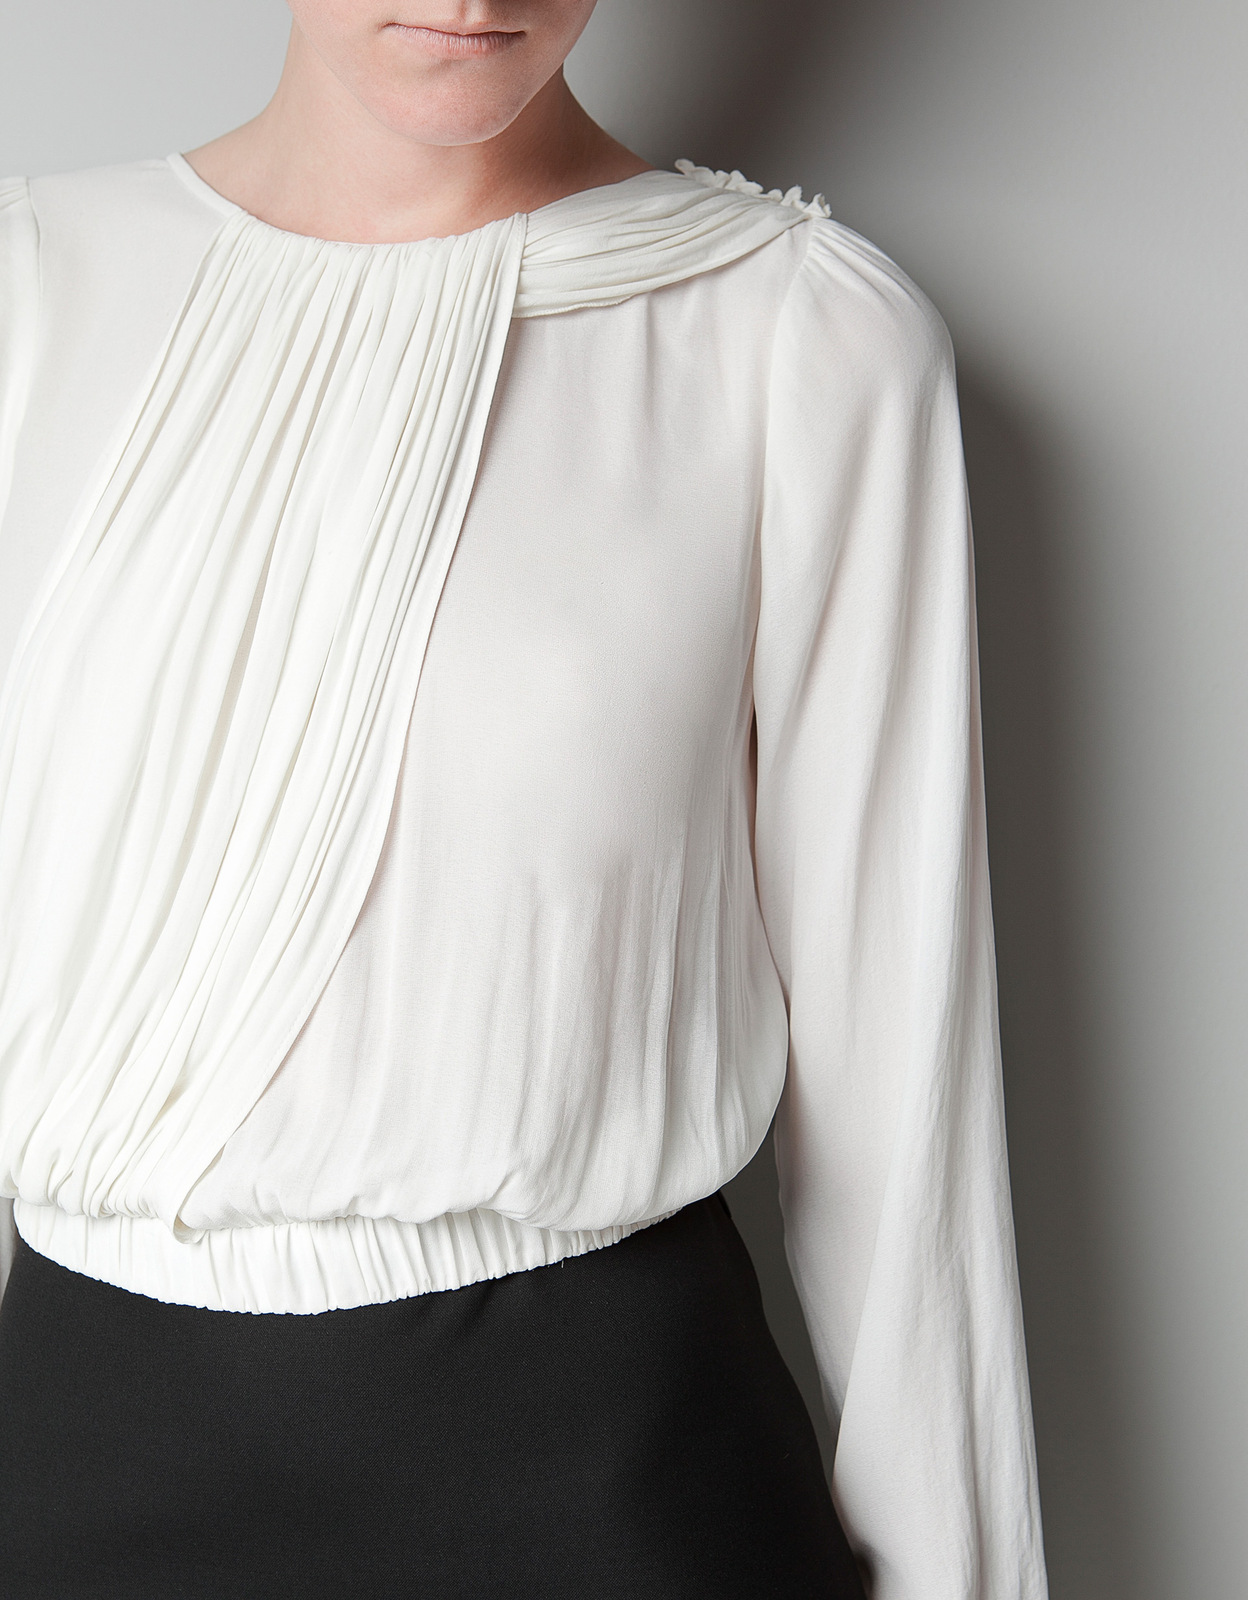 Zara fekete-fehér ruha 2012.10.21 fotója